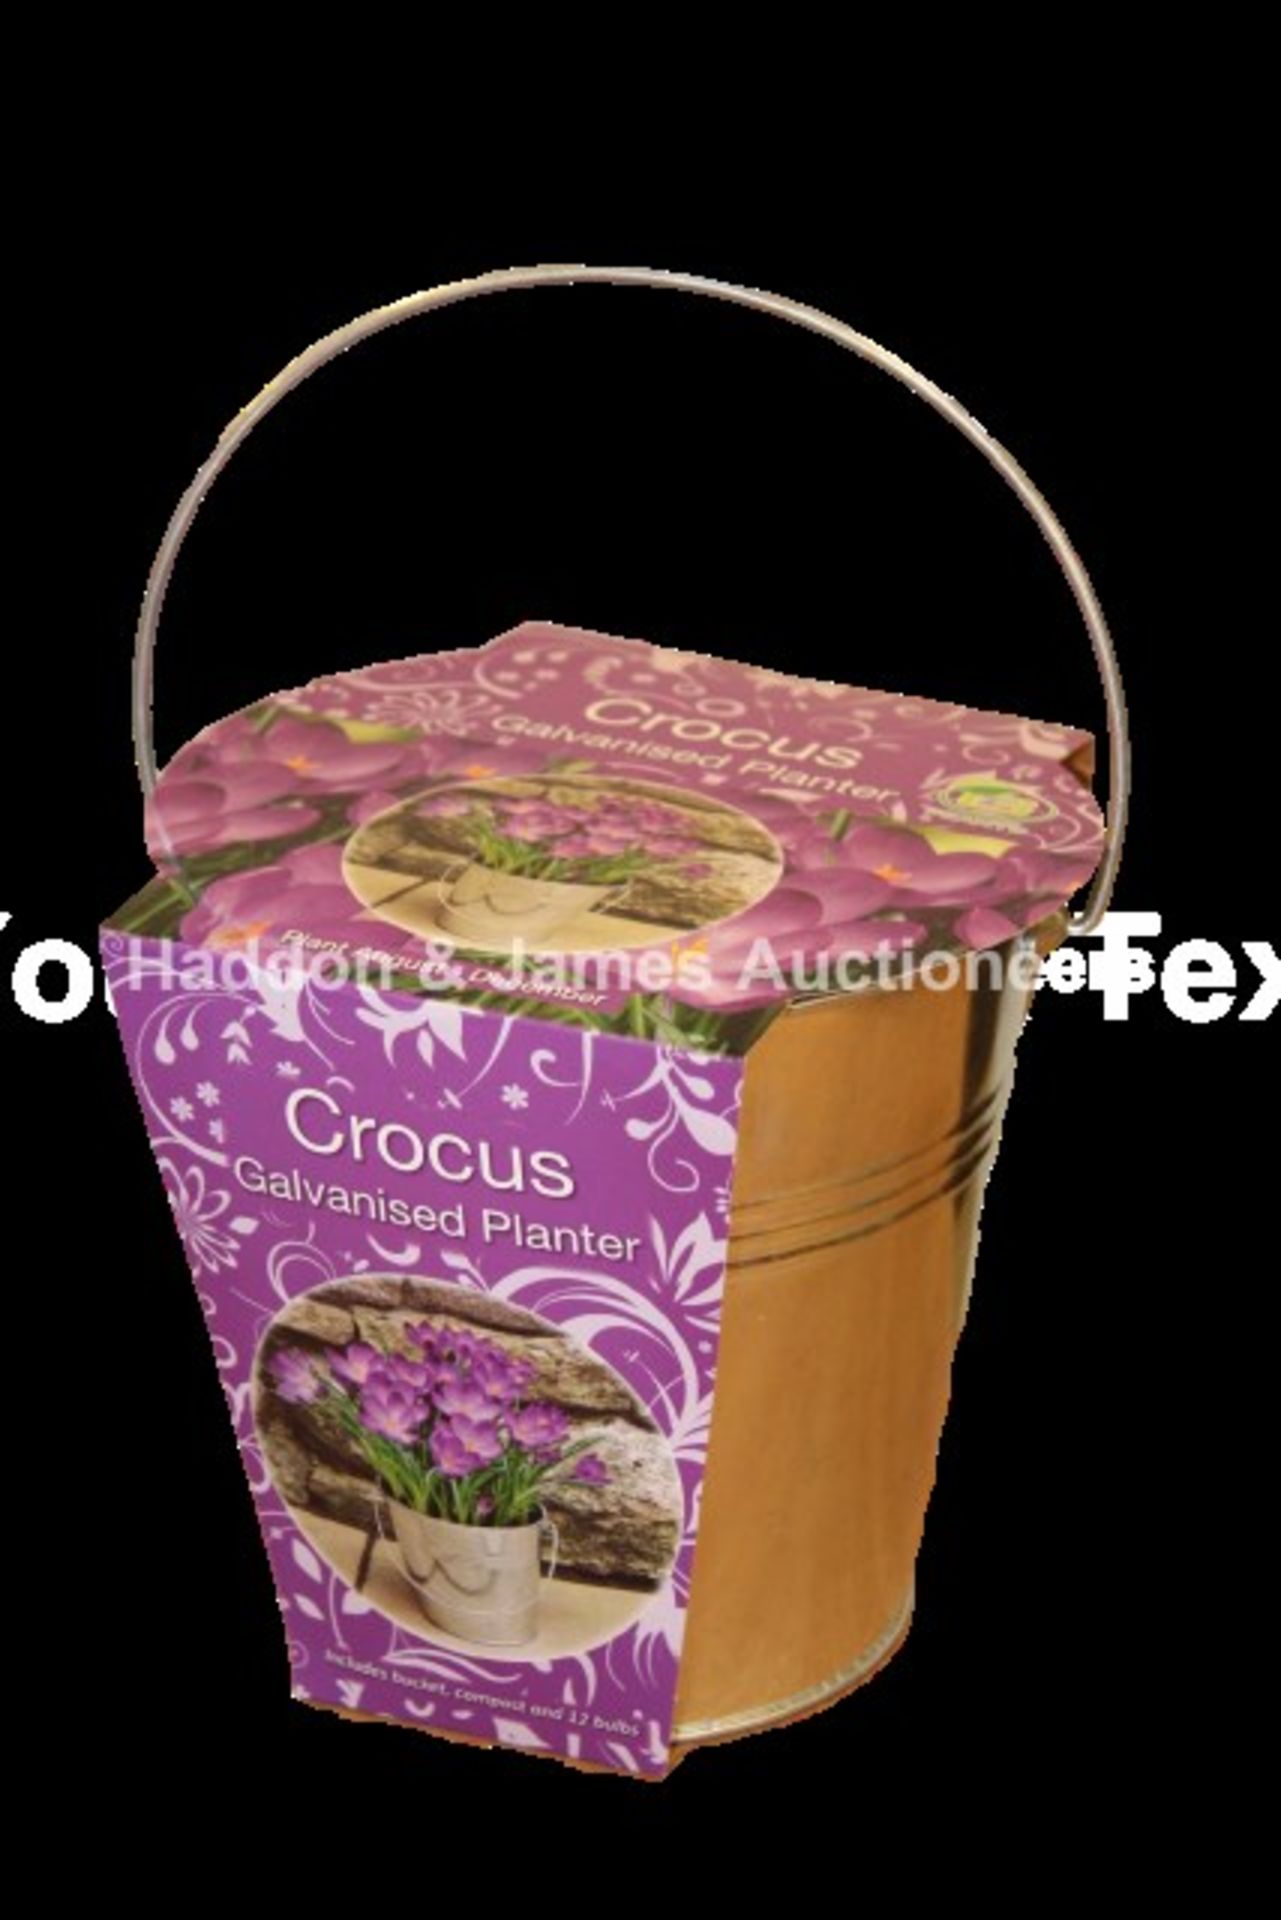 V Brand New Crocus 12 Bulb Galvanised Bucket Gift Set Includes 12 Bulbs, Bucket Planter And